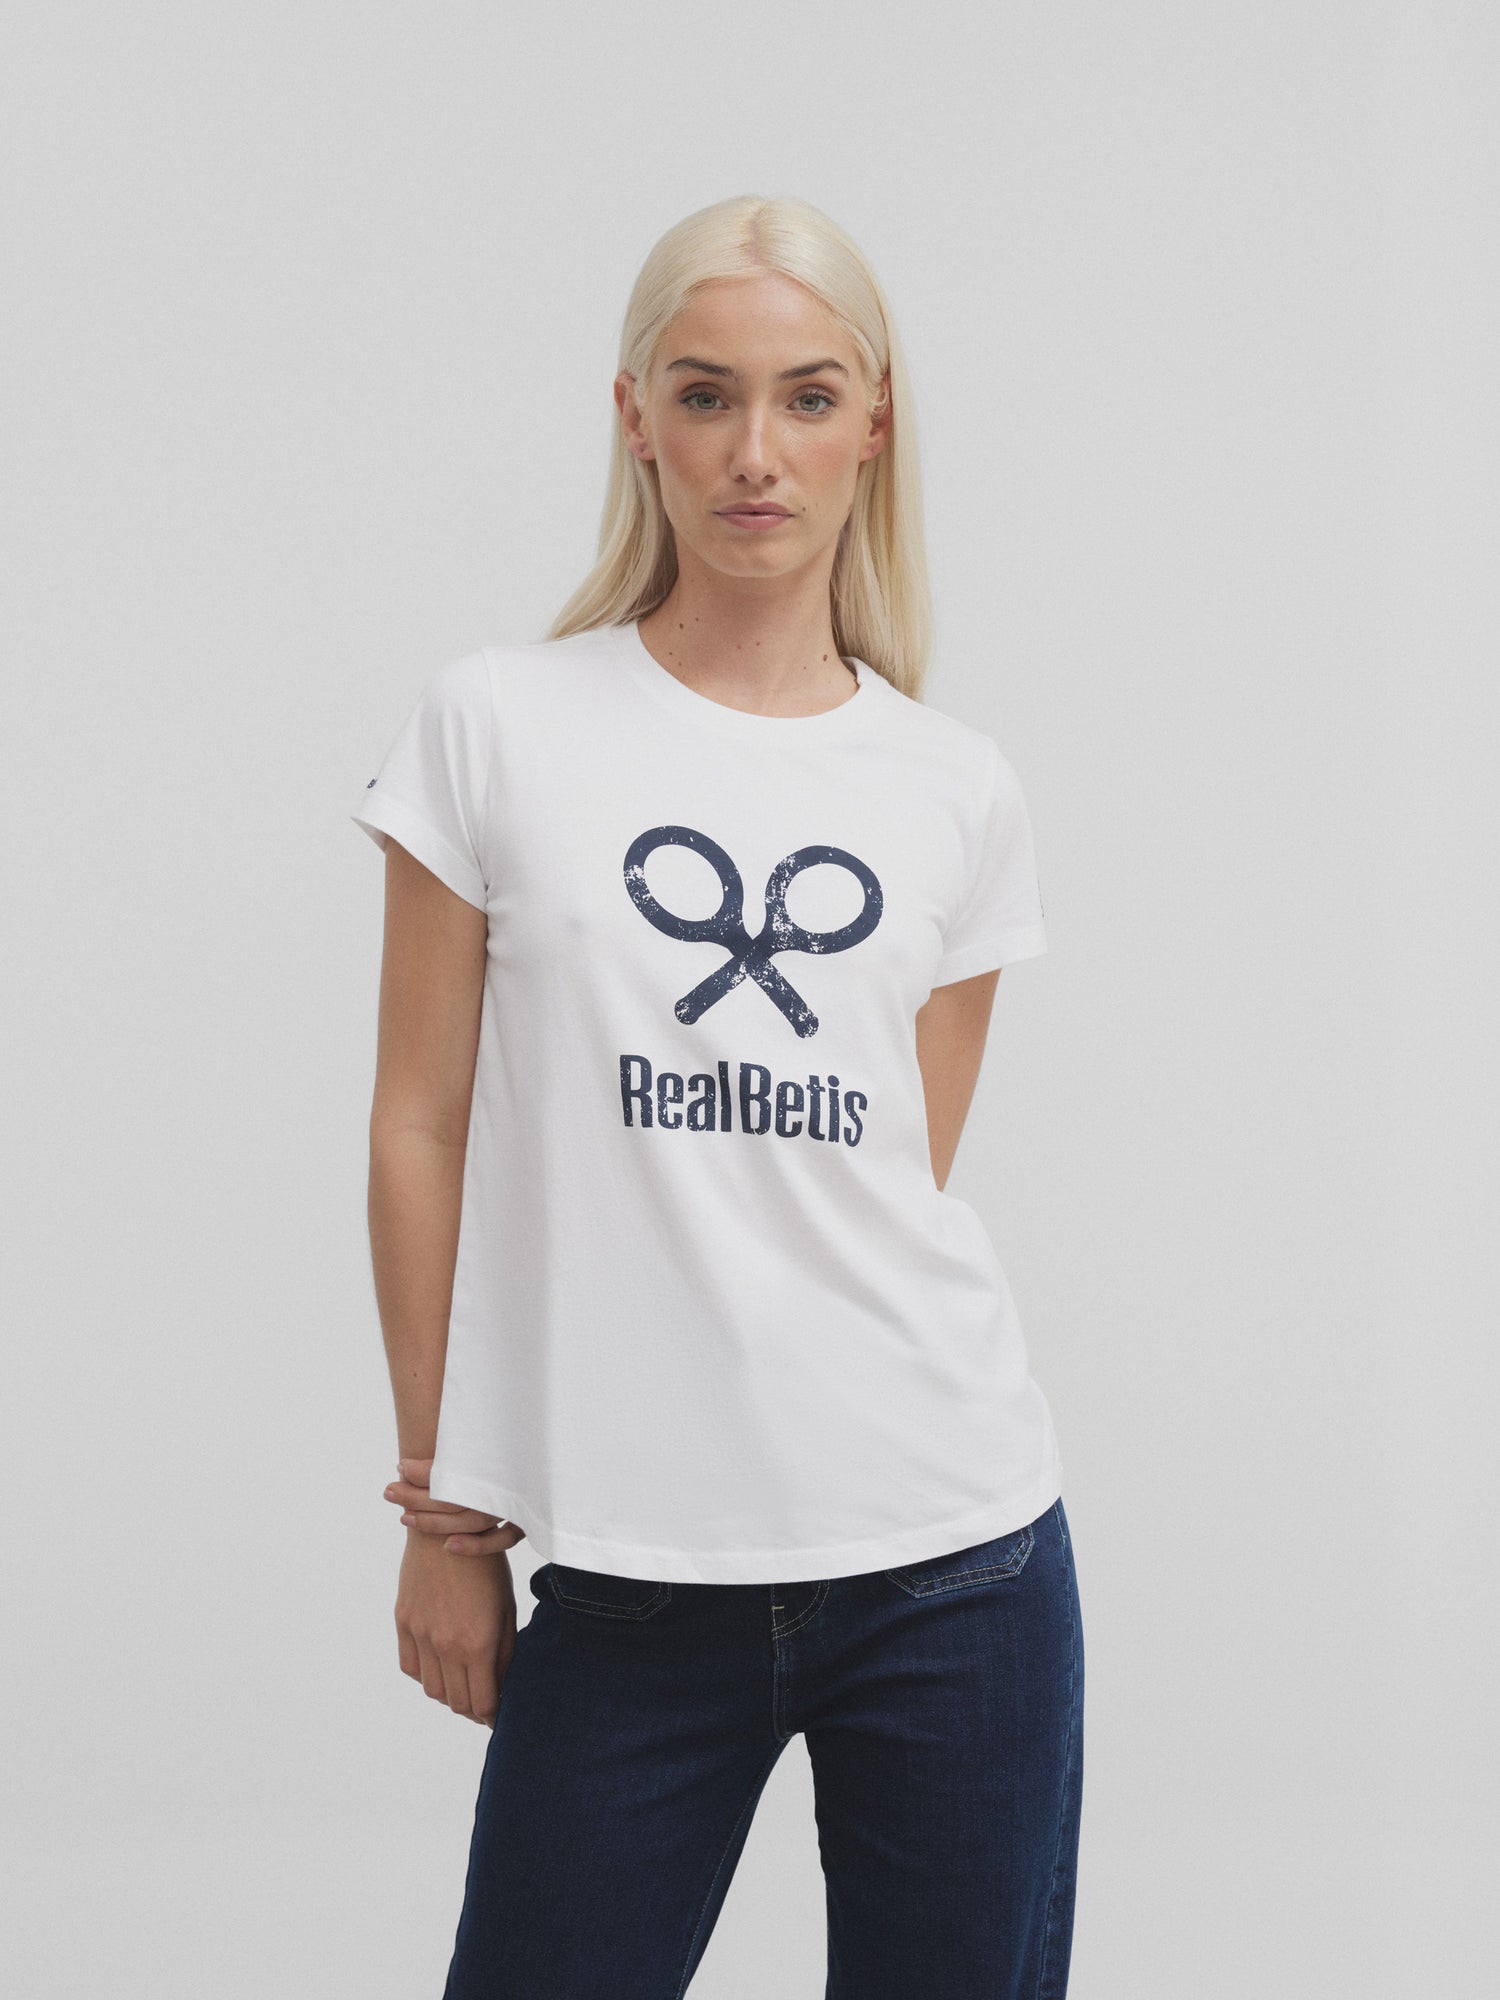 Real Betis white women's racket t-shirt